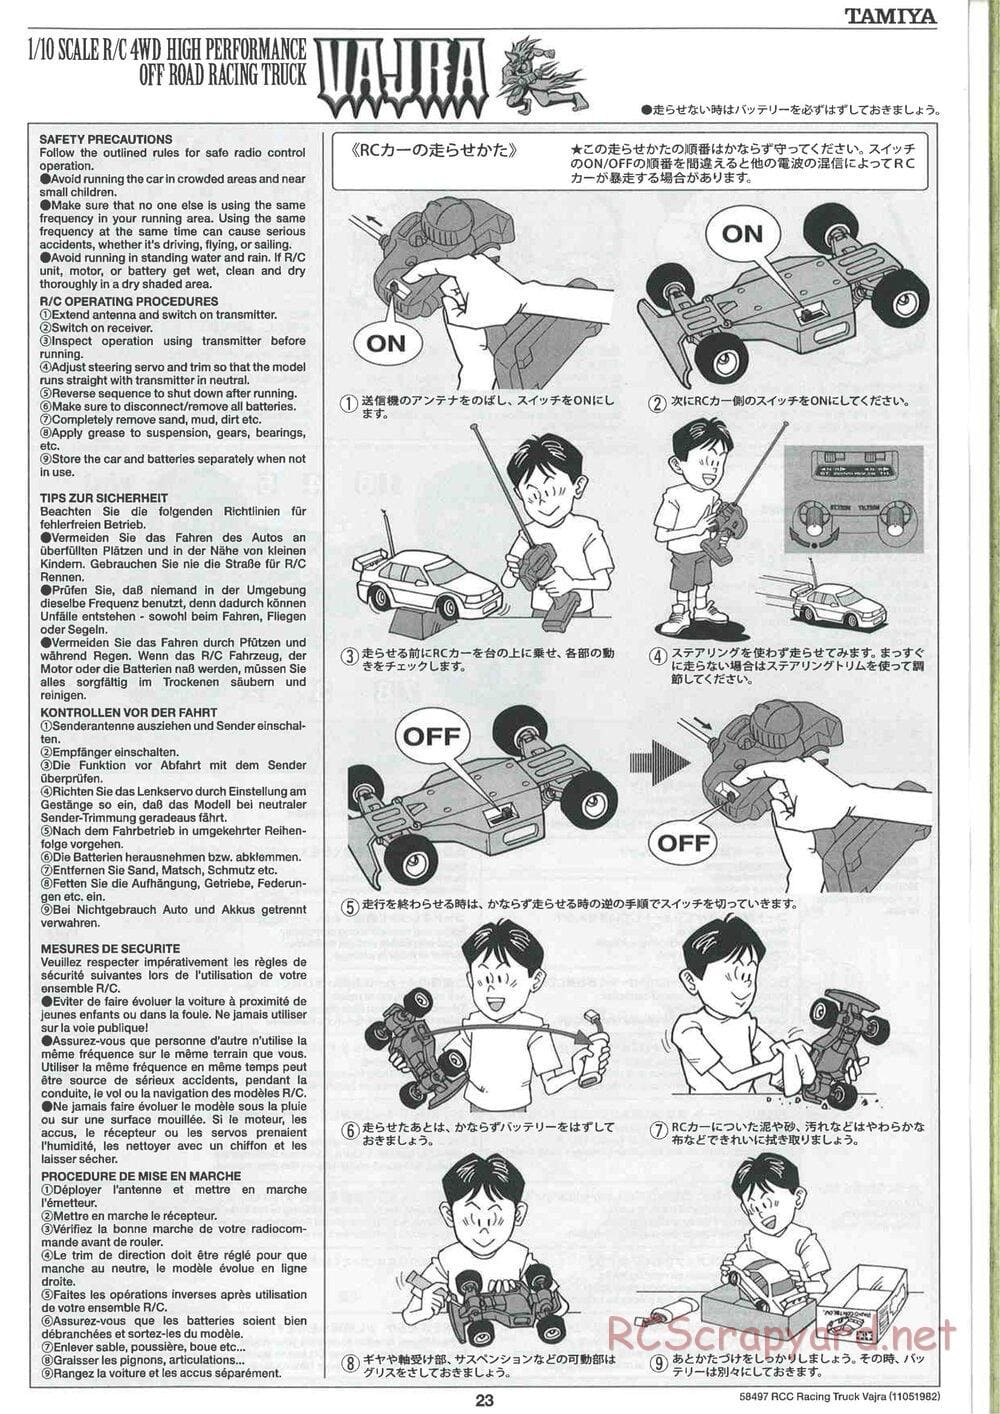 Tamiya - Vajra - AV Chassis - Manual - Page 23